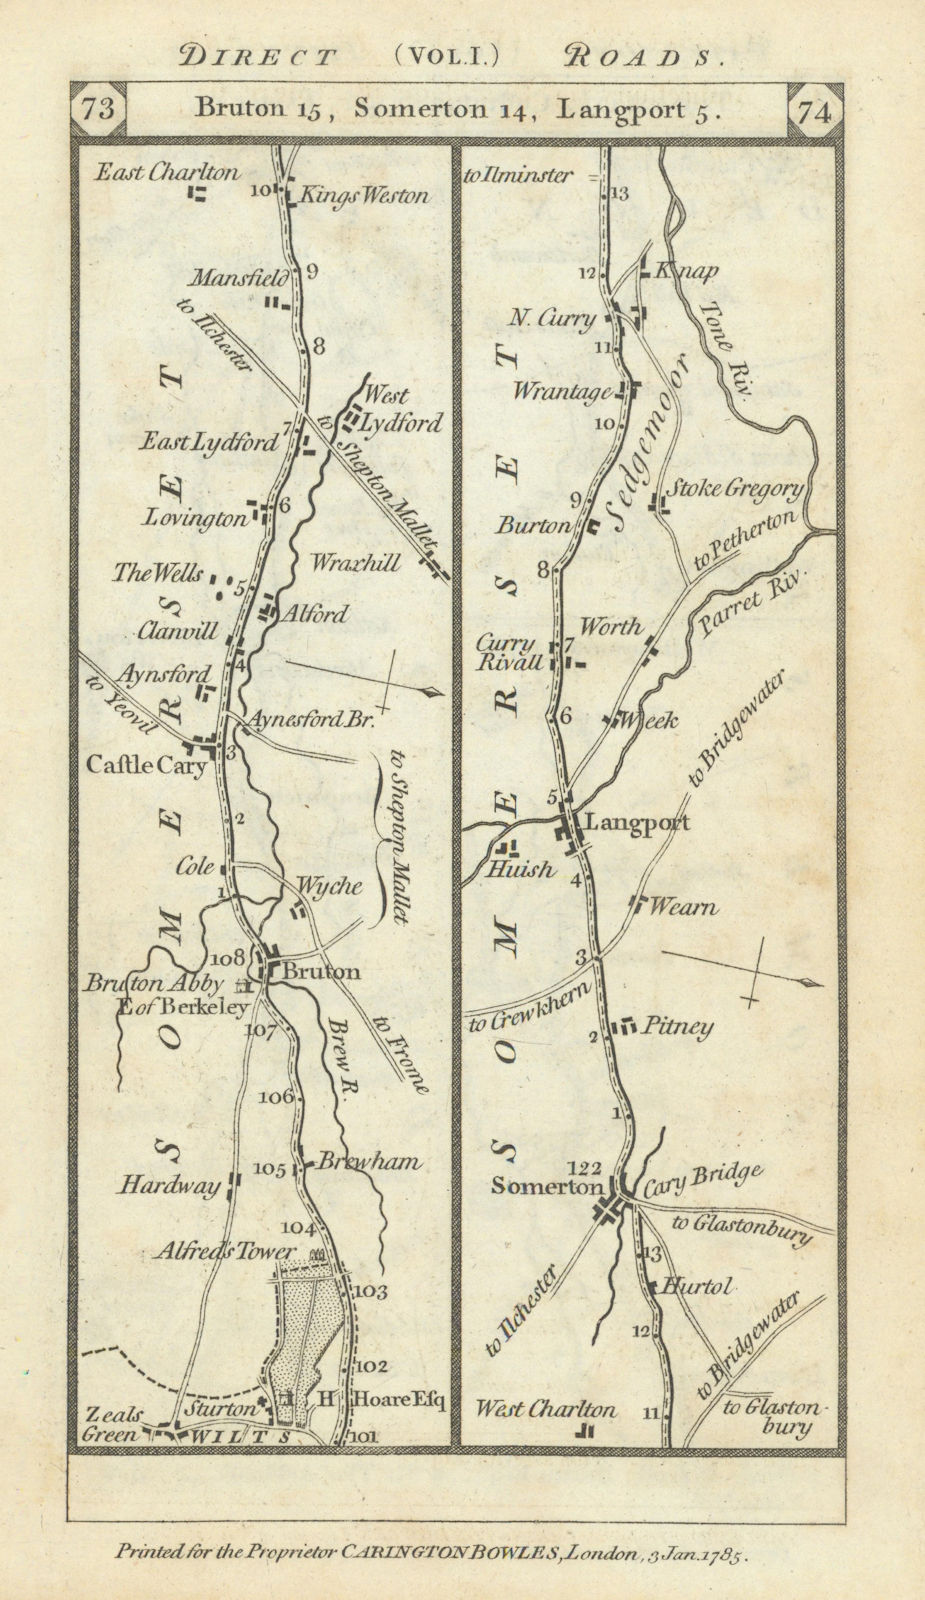 Stourton-Bourton-Castle Cary-Langport-Wrantage road strip map PATERSON 1785